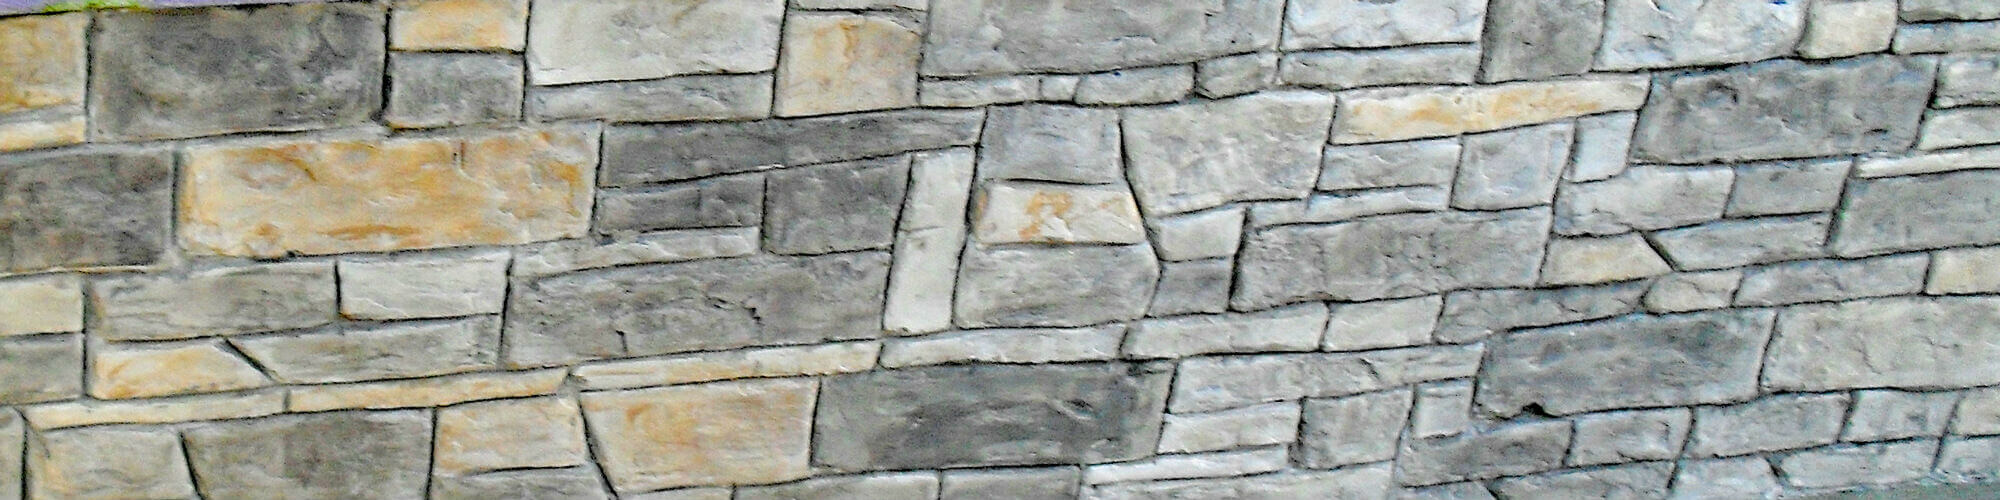 Concrete Veneer Wall